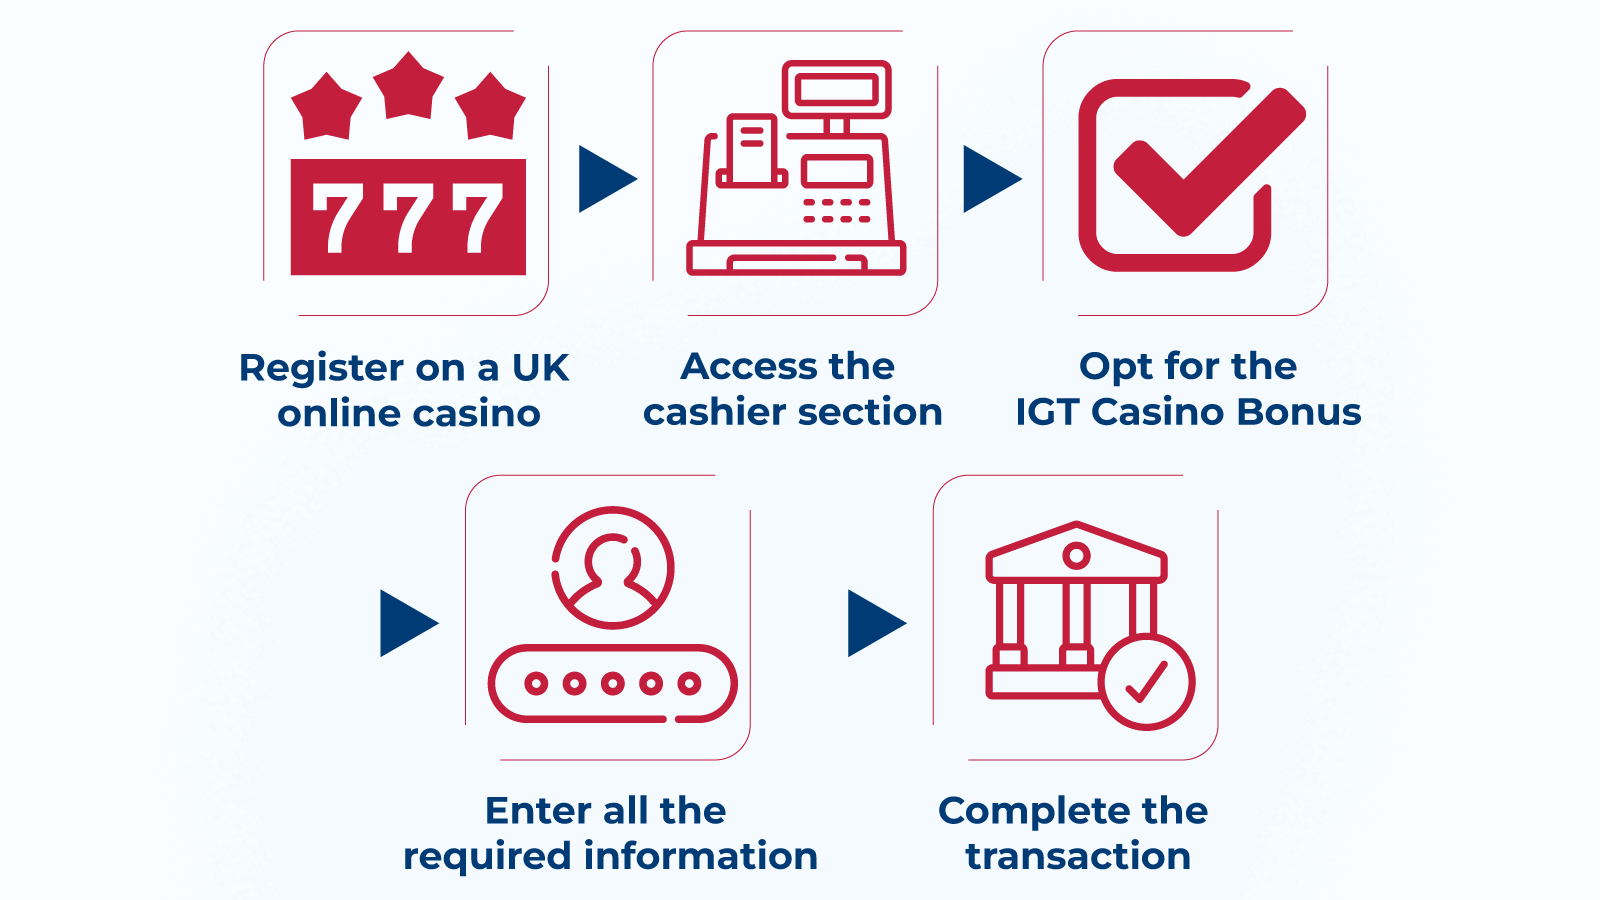 How to claim a deposit IGT casino bonus